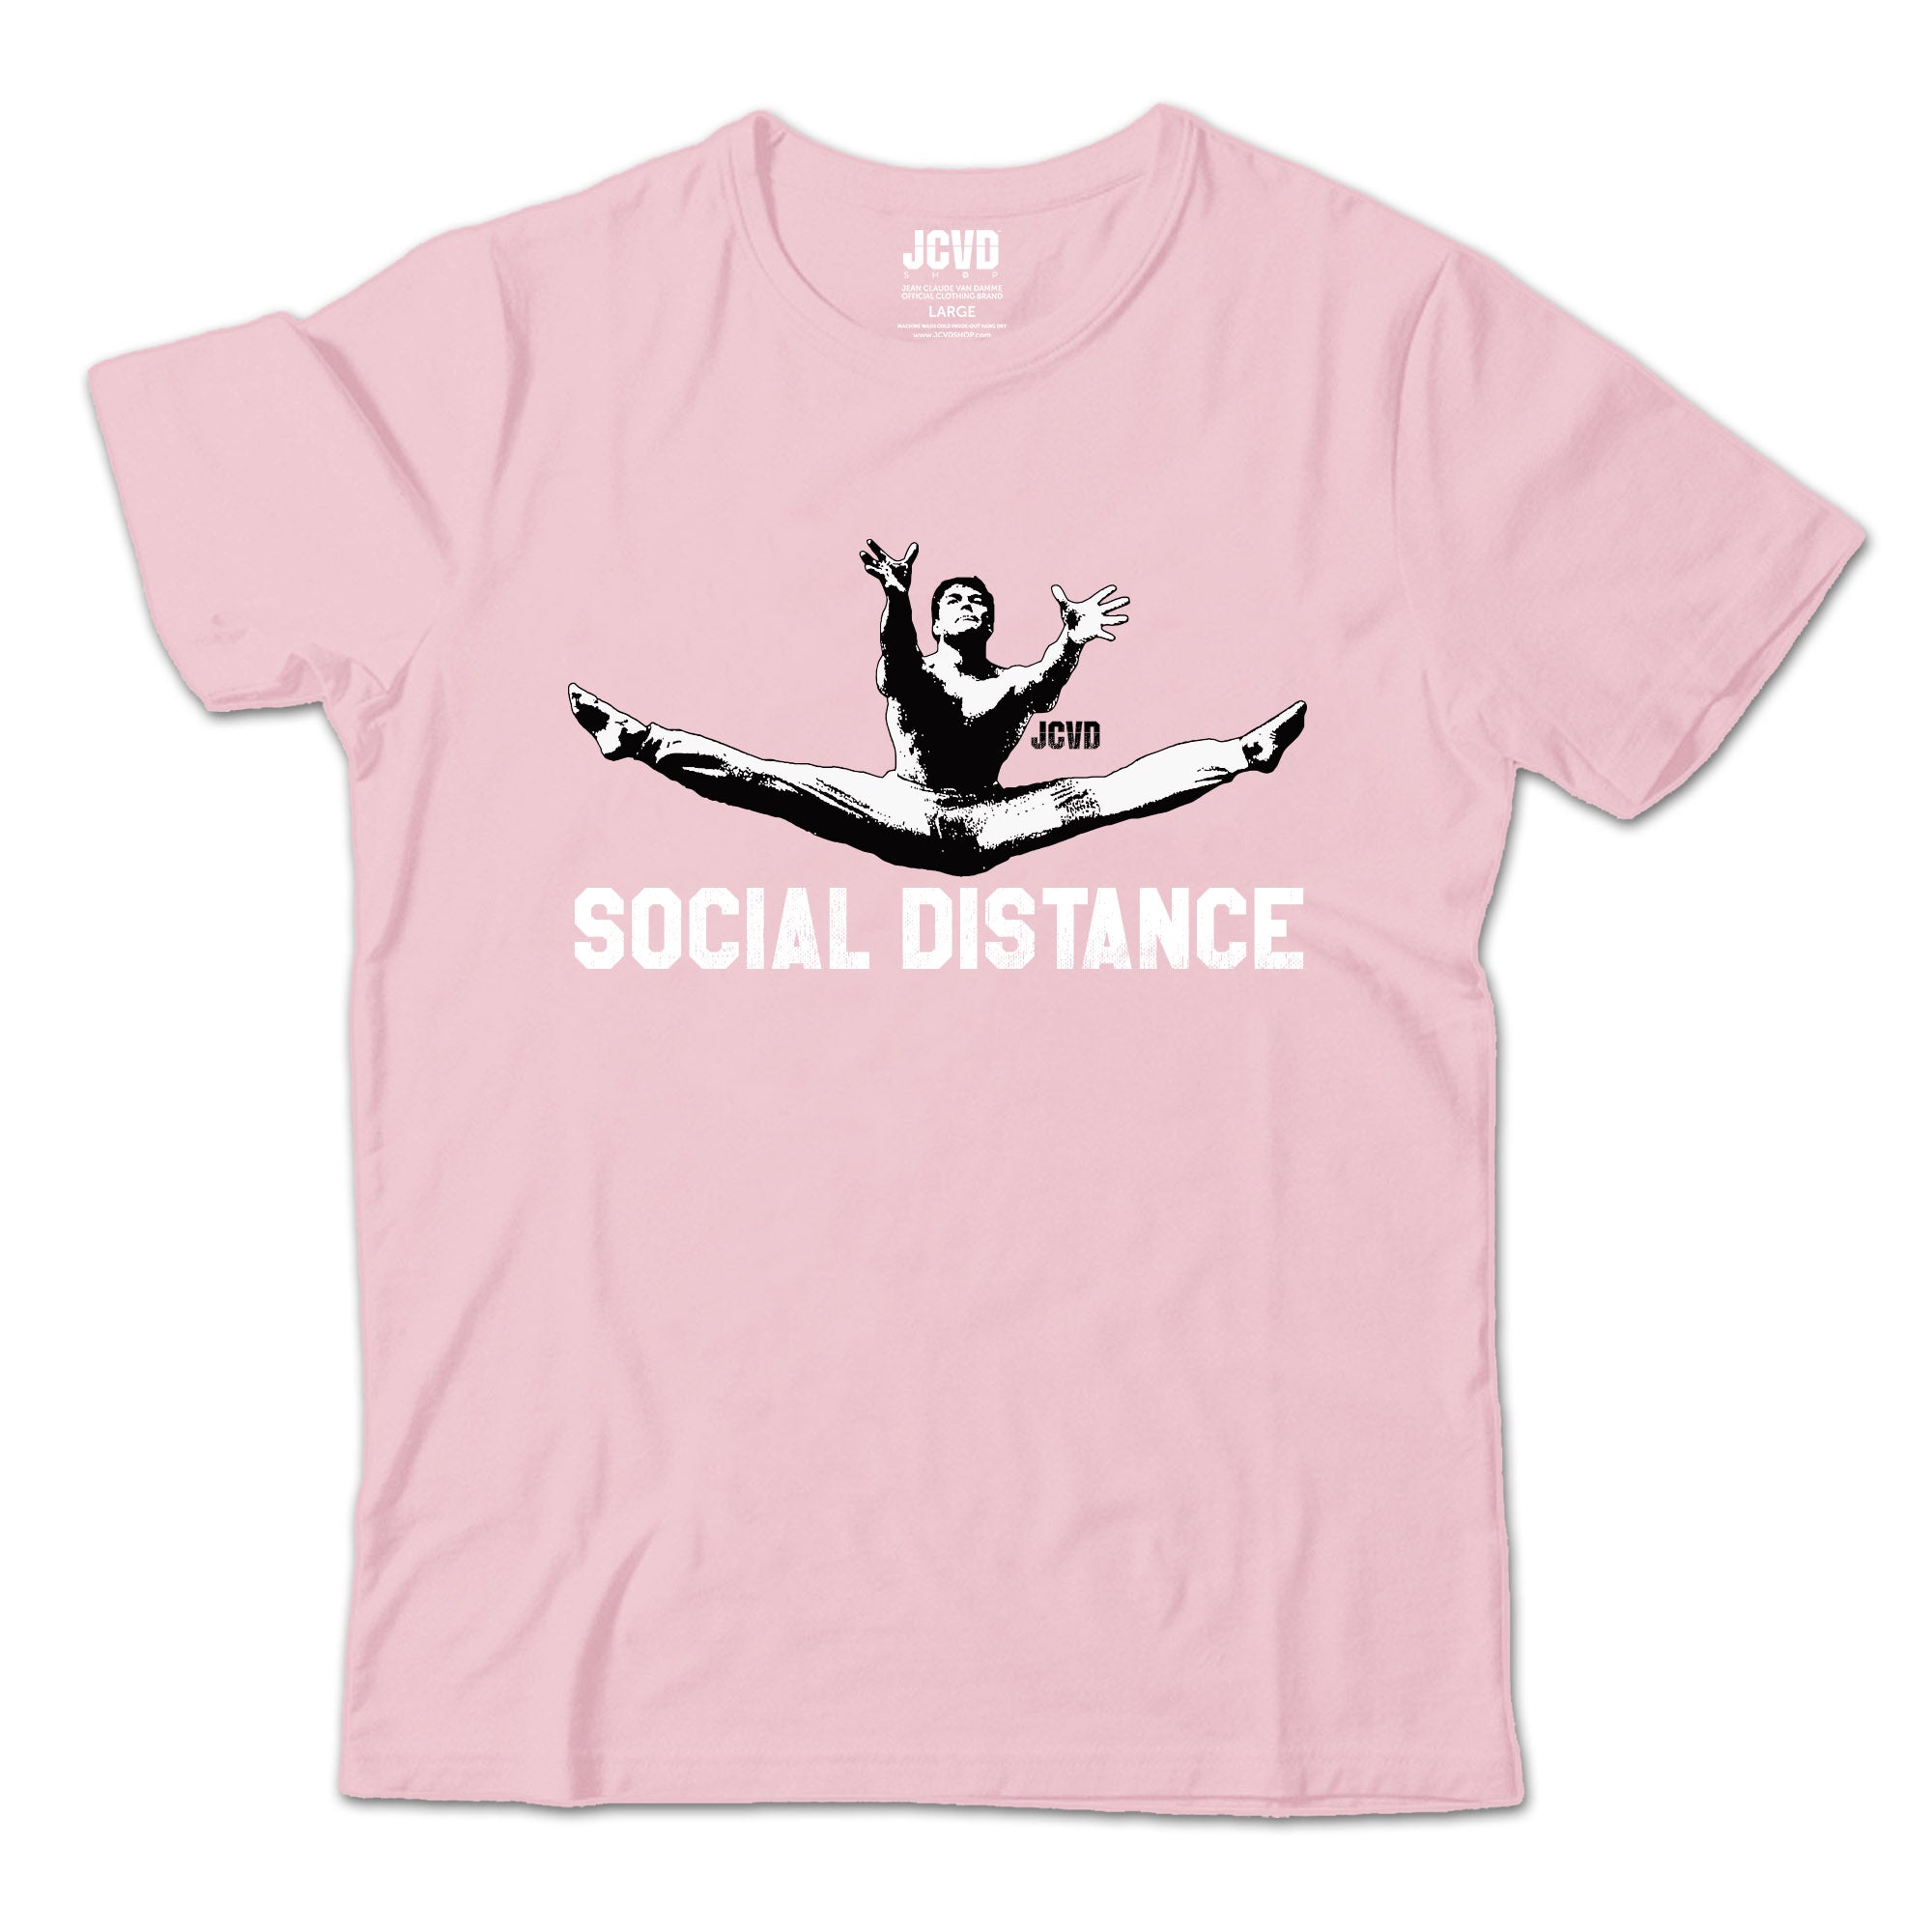 JCVD Social Distance Pink Tee | JCVD Shop